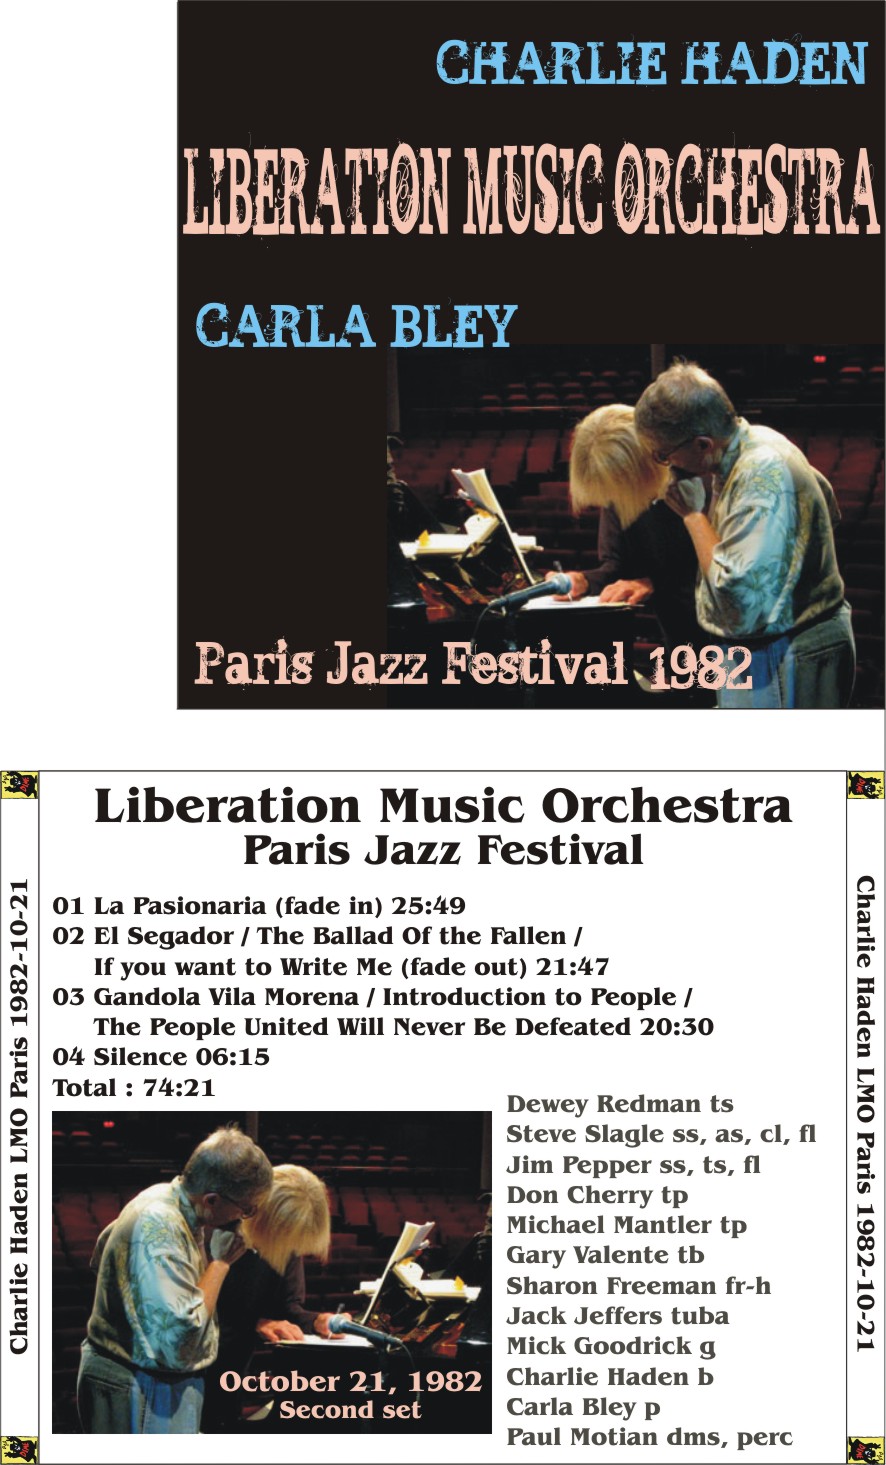 CharlieHadenLiberationMusicOrchestraCarlaBley1982-10-21FestivalDeParisFrance.jpg